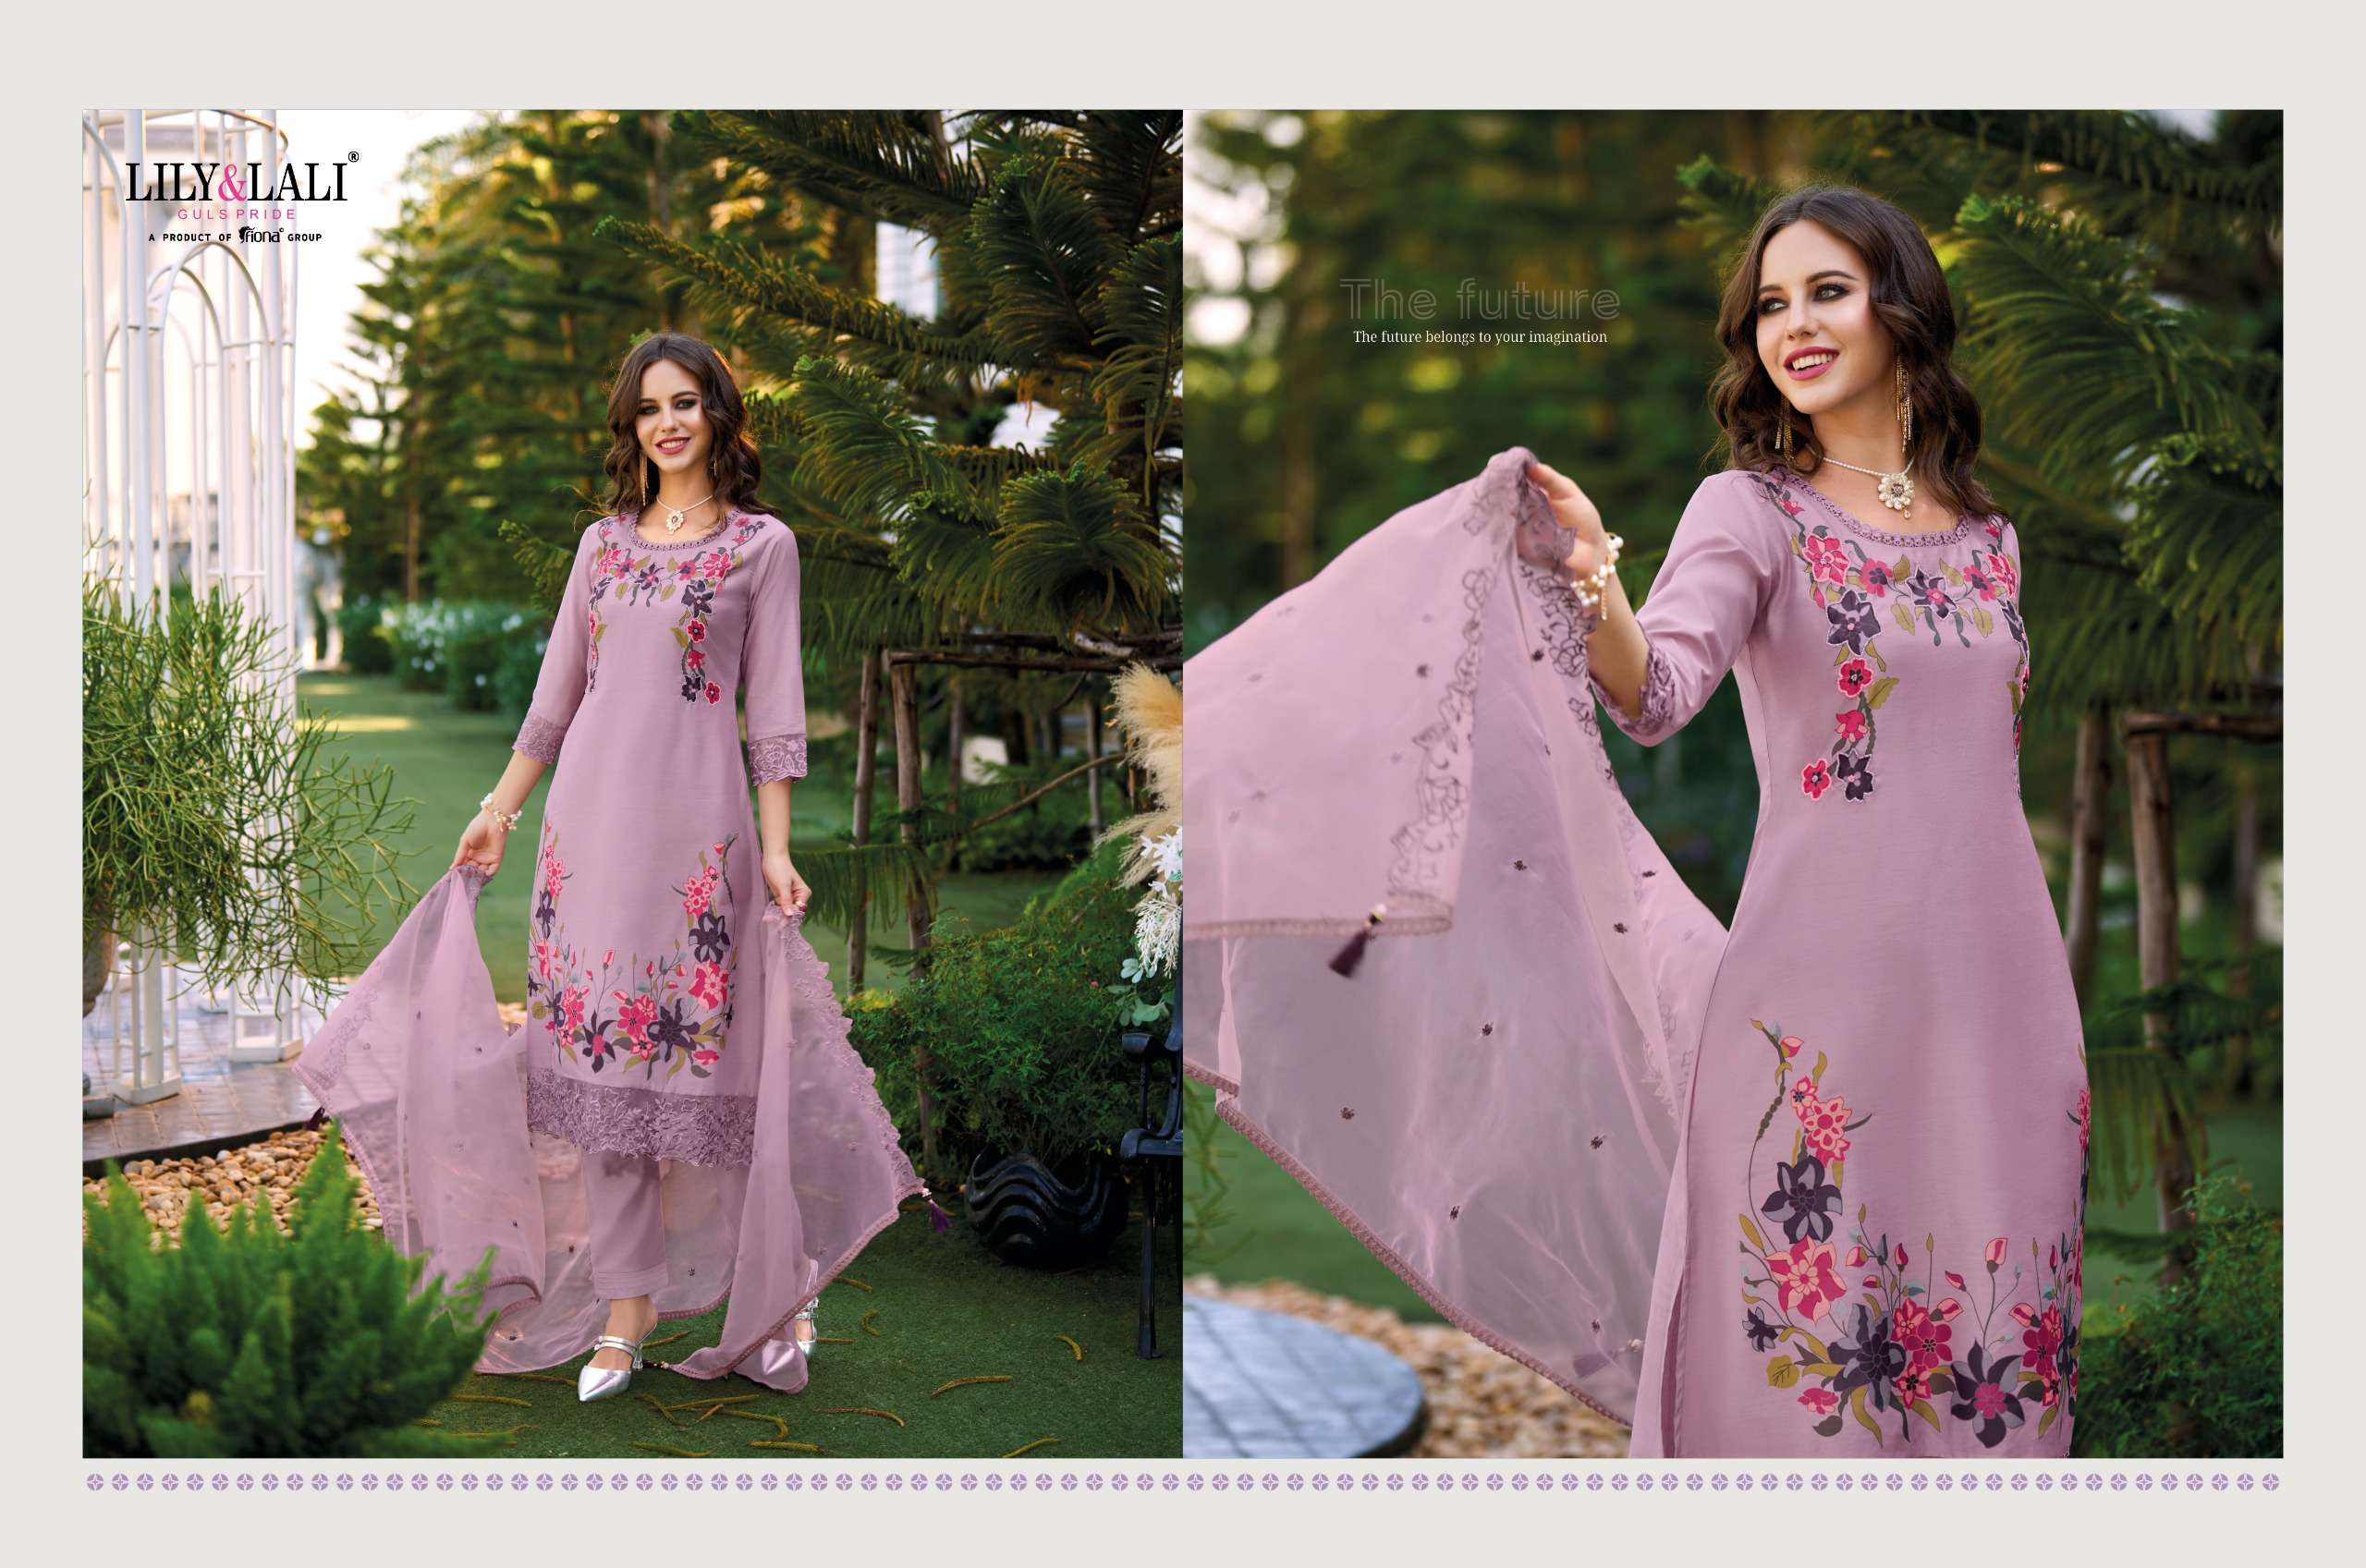 Manyata Buy Lily Lali Wholesale Online Lowest Price Designer Kurta Suit Sets